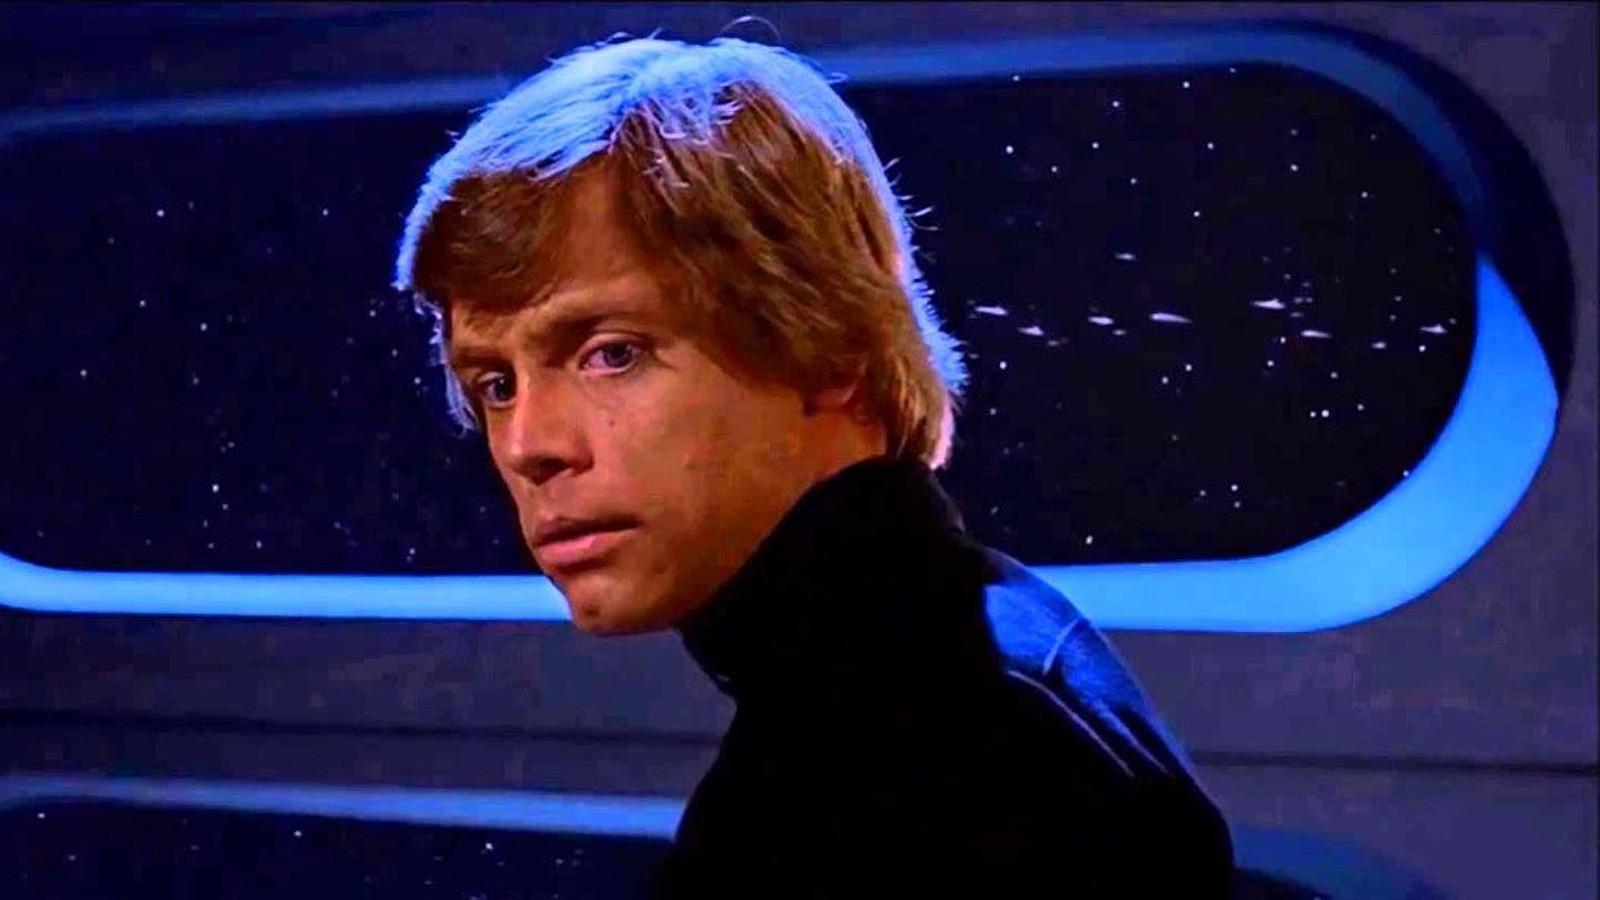 Luke in star wars return of the jedi